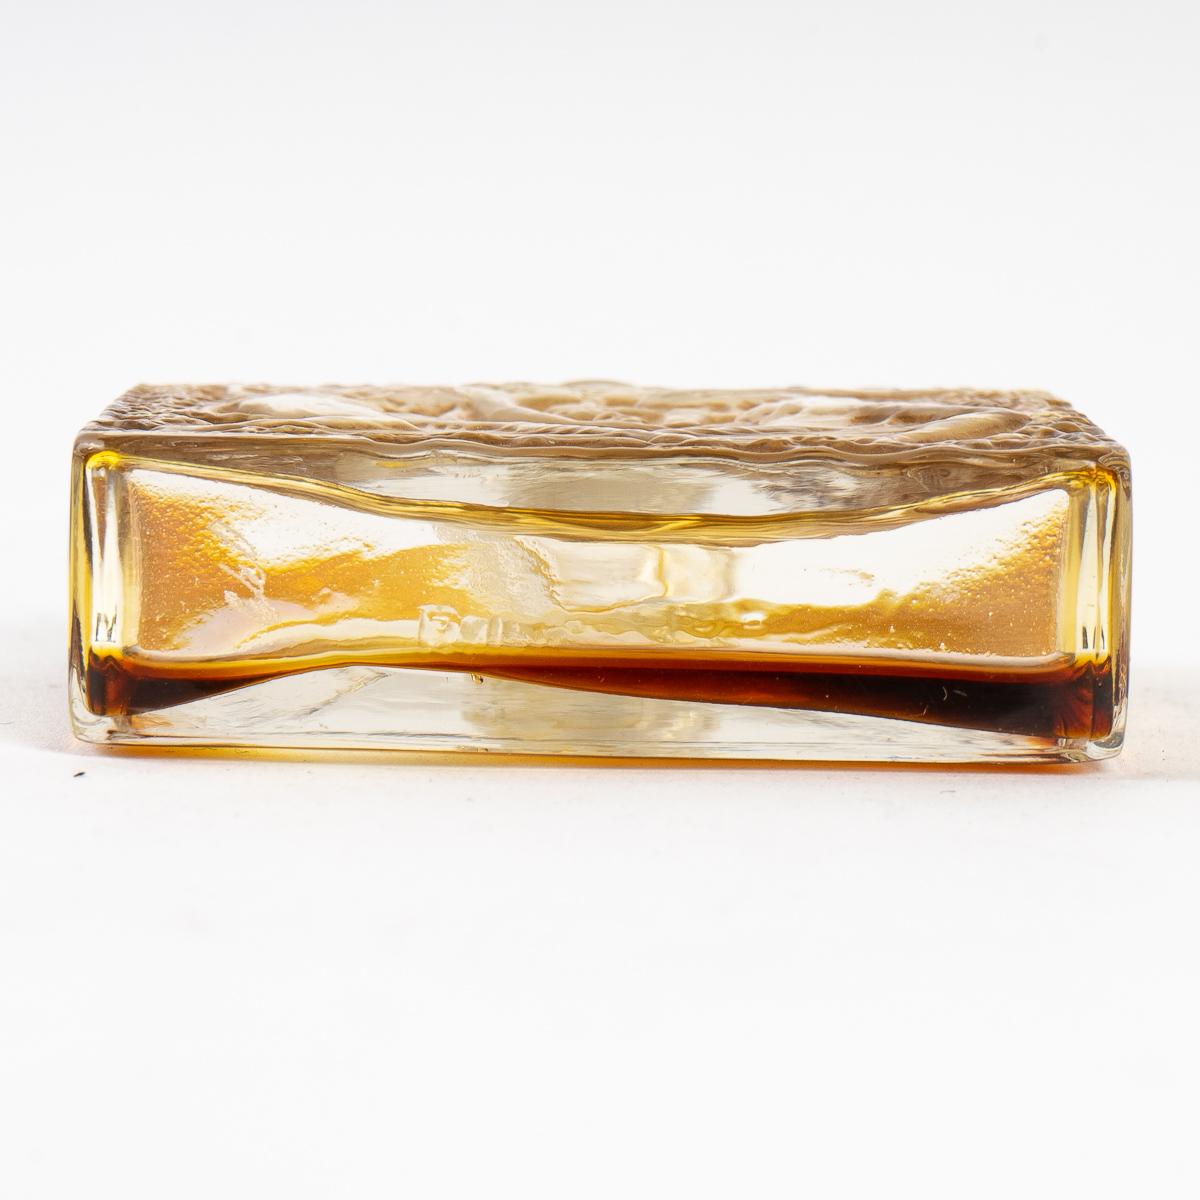 Molded 1923 Rene Lalique Elegance D'Orsay Perfume Bottle Glass Sepia Patina Label & Box